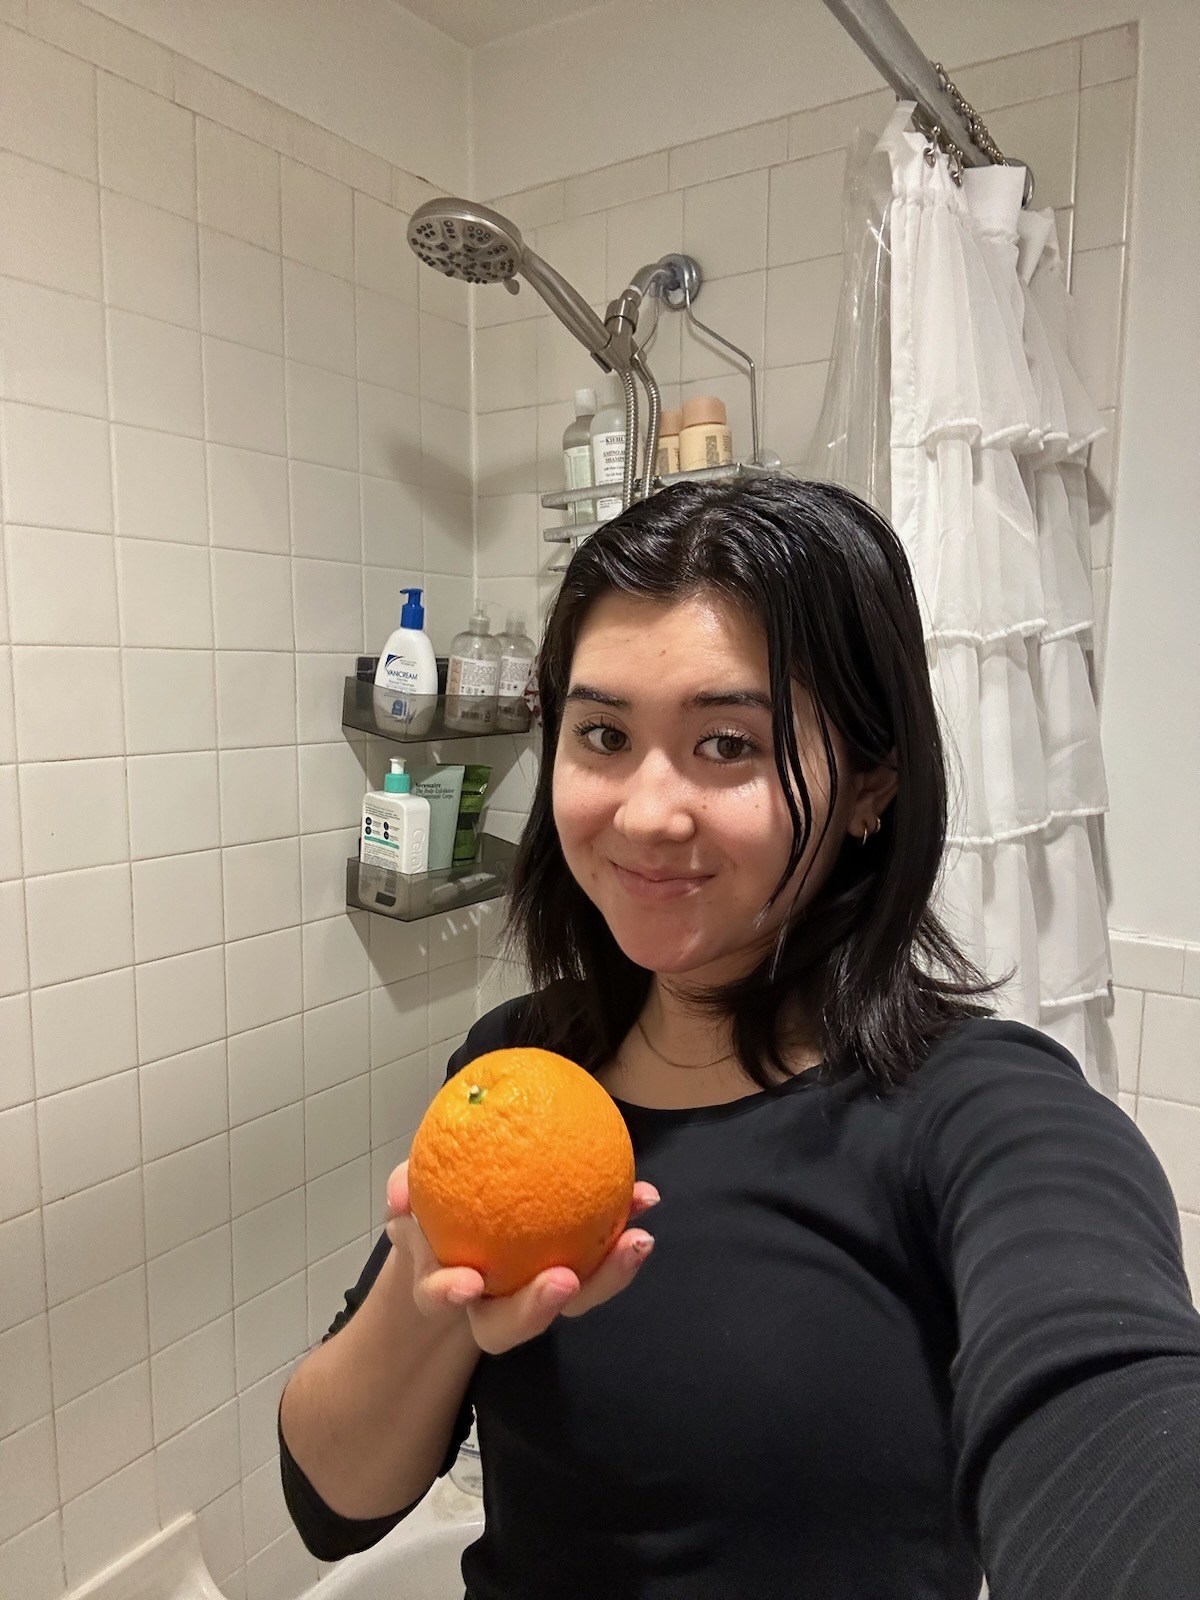 Jen standing outside the shower holding an orange